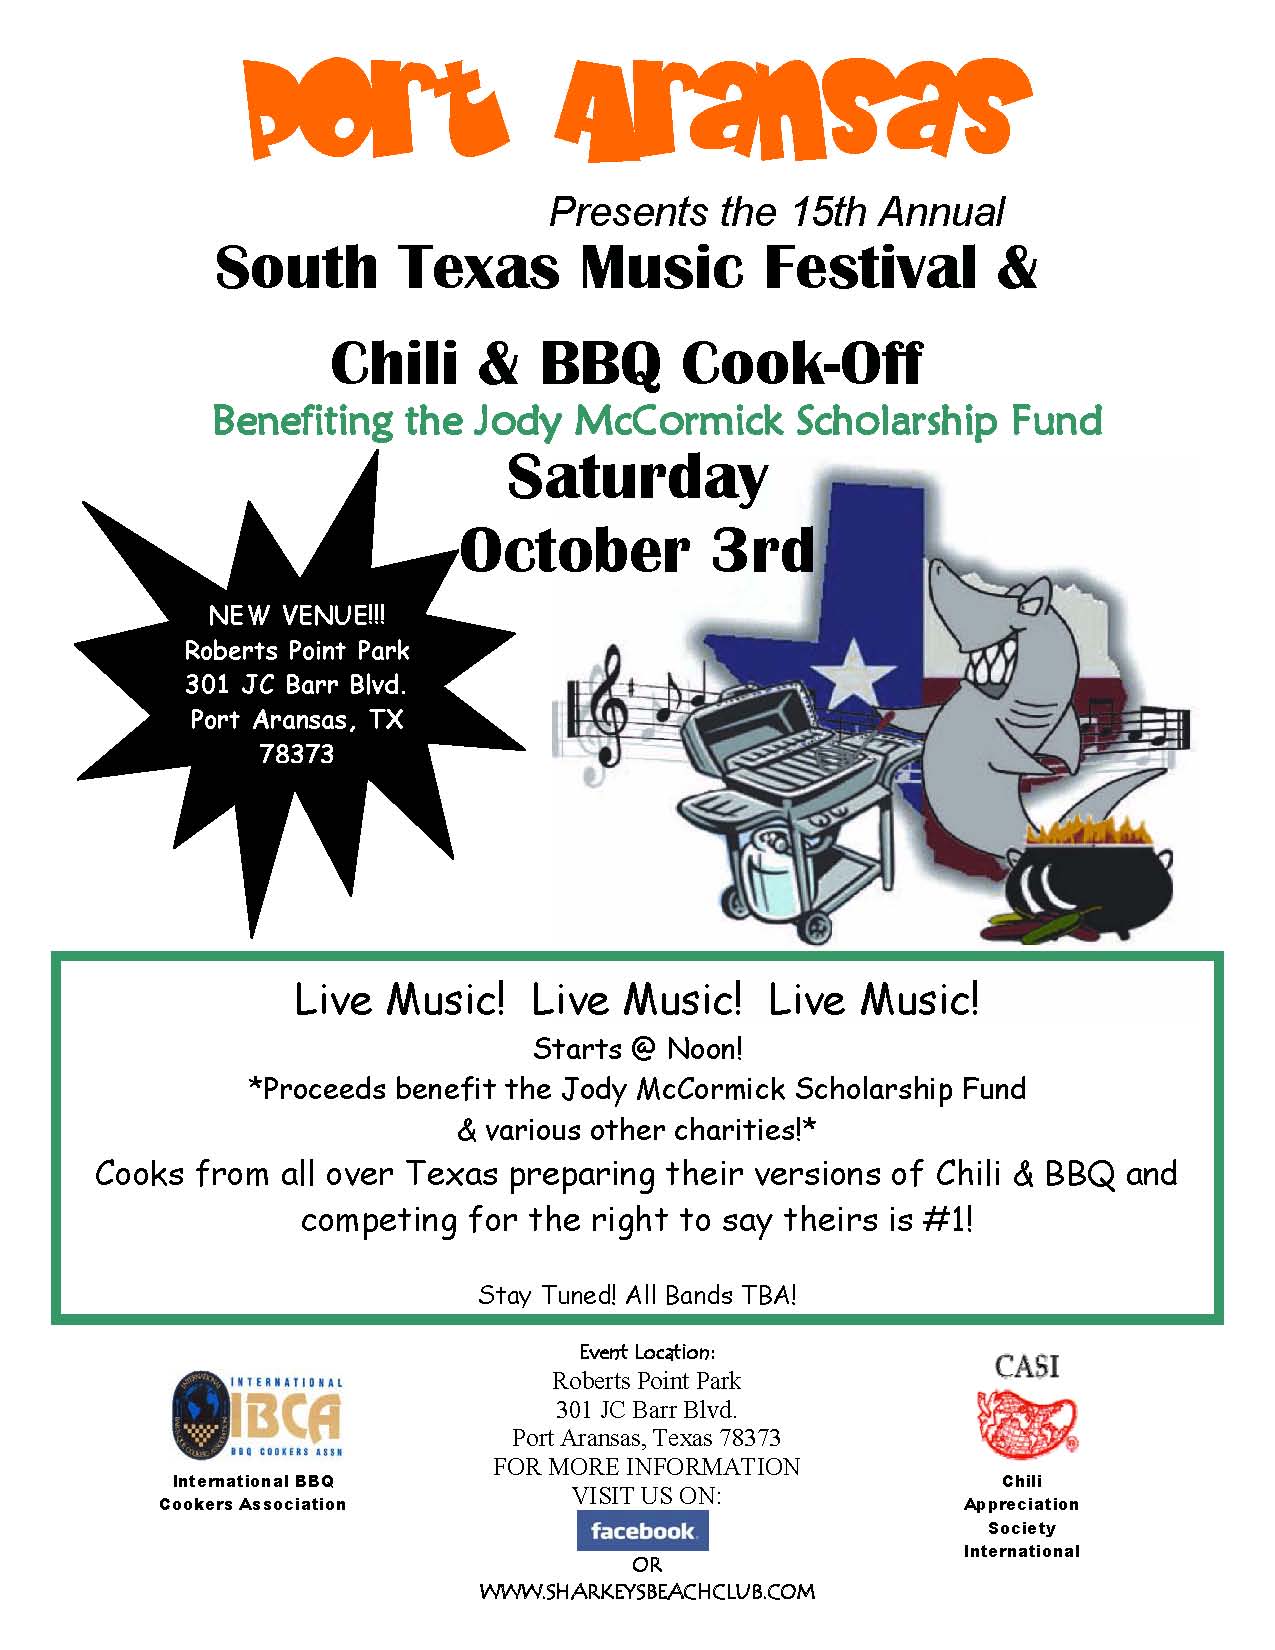 South Texas Music Fest Oct 3rd in Port Aransas, Texas.